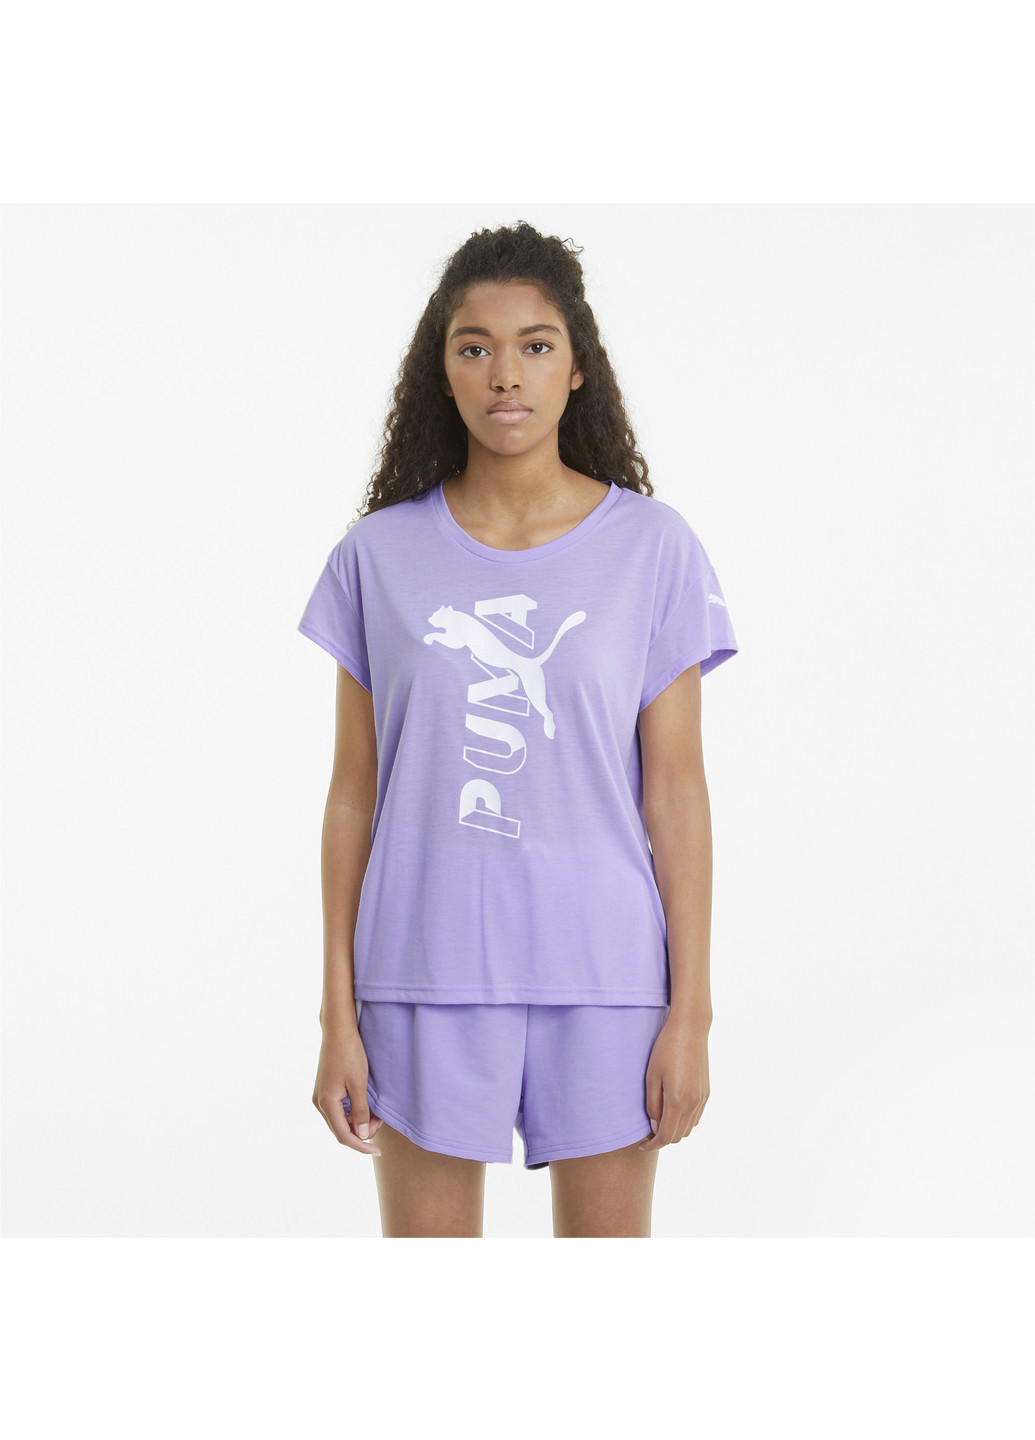 Пурпурная всесезон футболка modern sports women's tee Puma